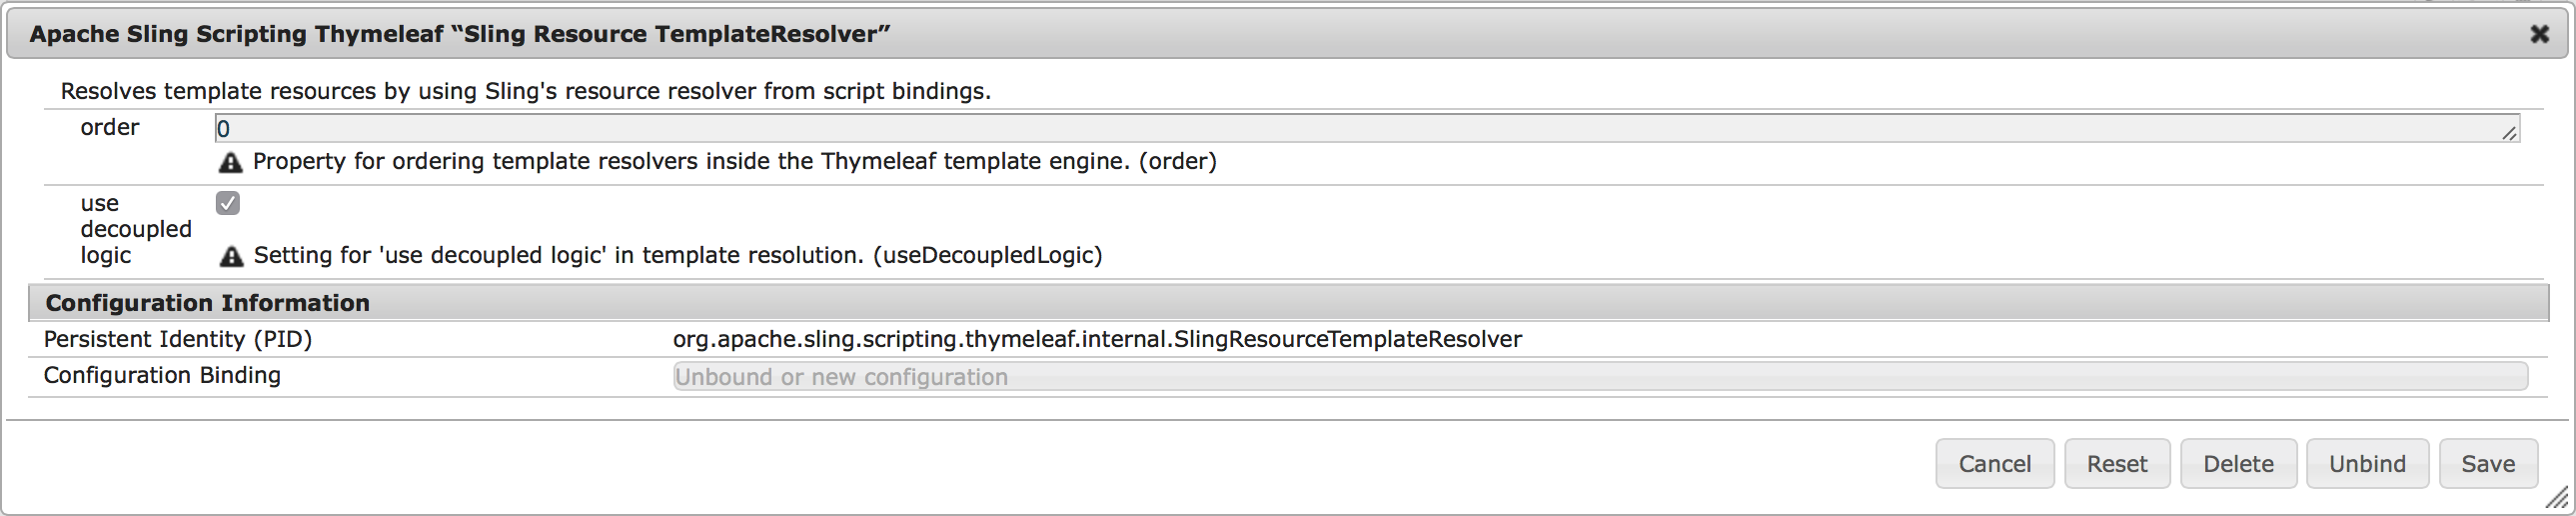 Apache Sling Scripting Thymeleaf “Sling Resource TemplateResolver”